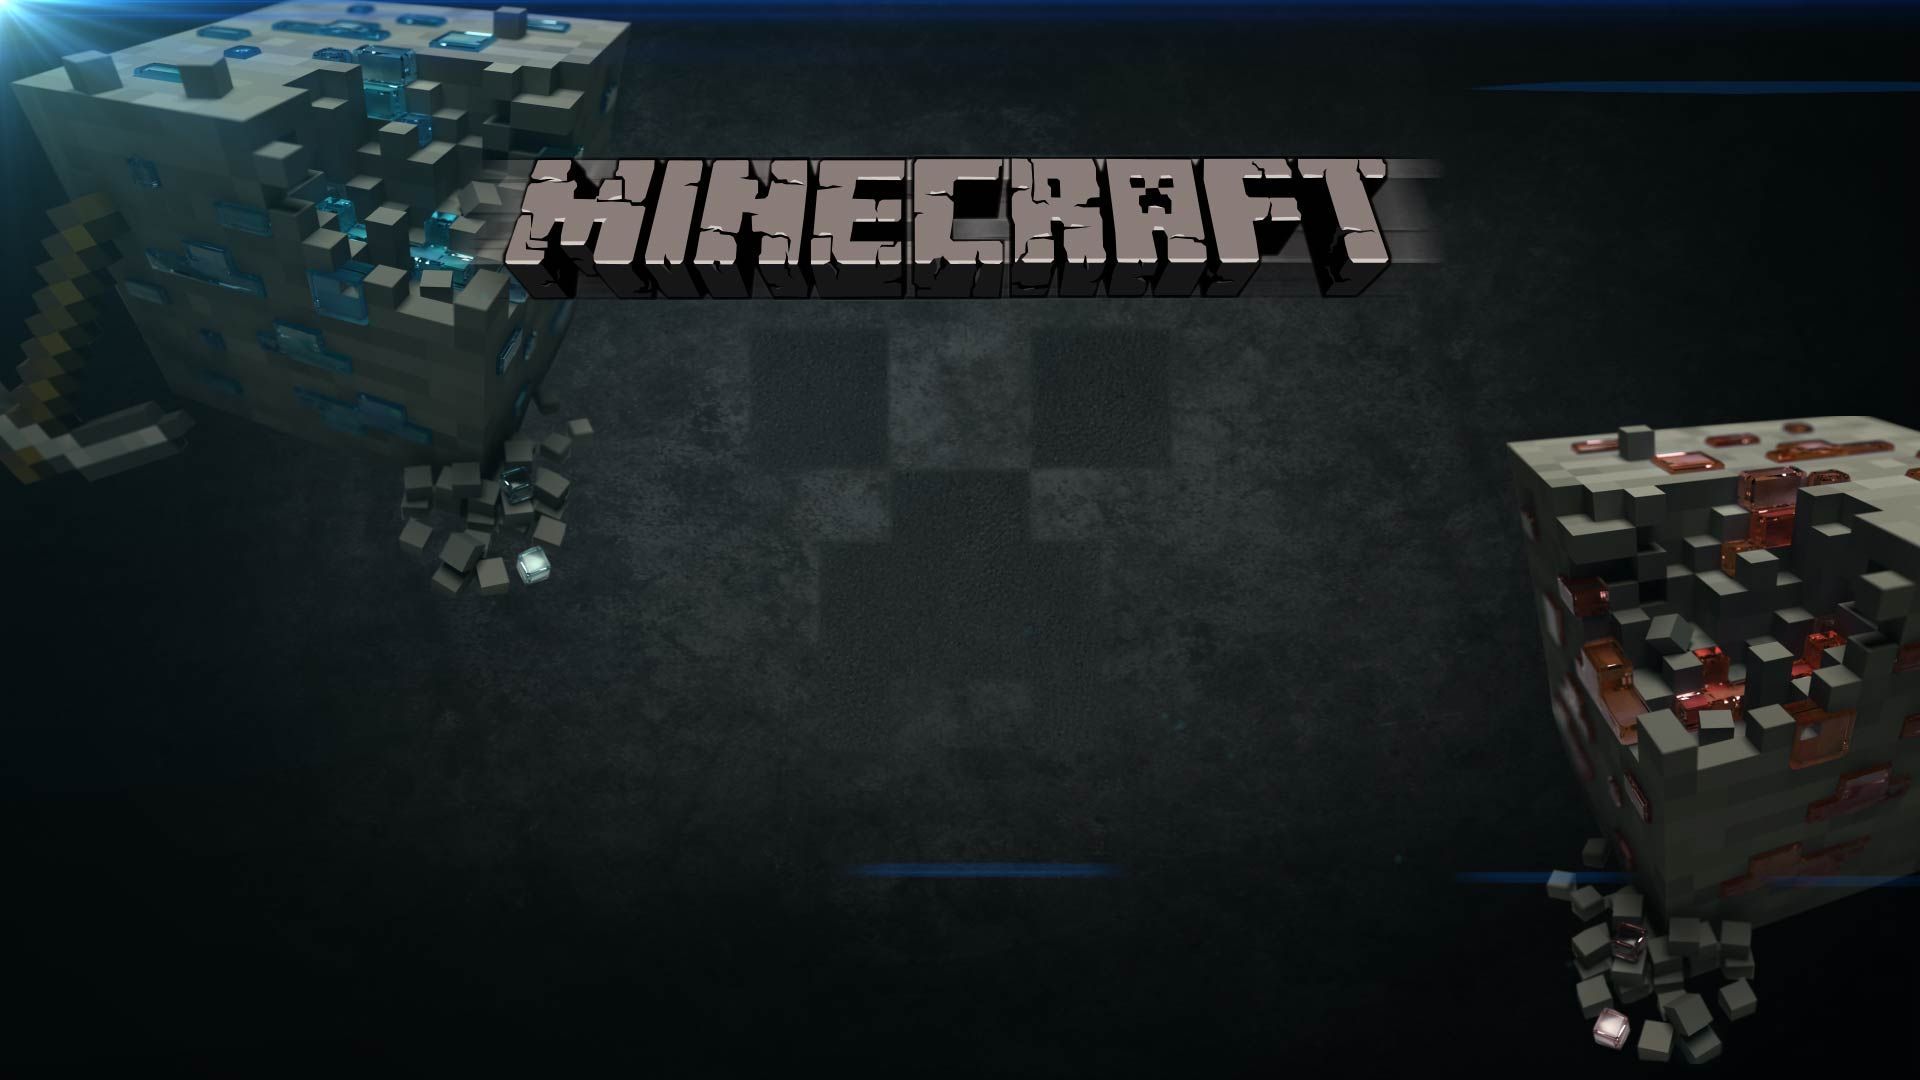 play minecraft. Minecraft image, Background image hd, Minecraft wallpaper